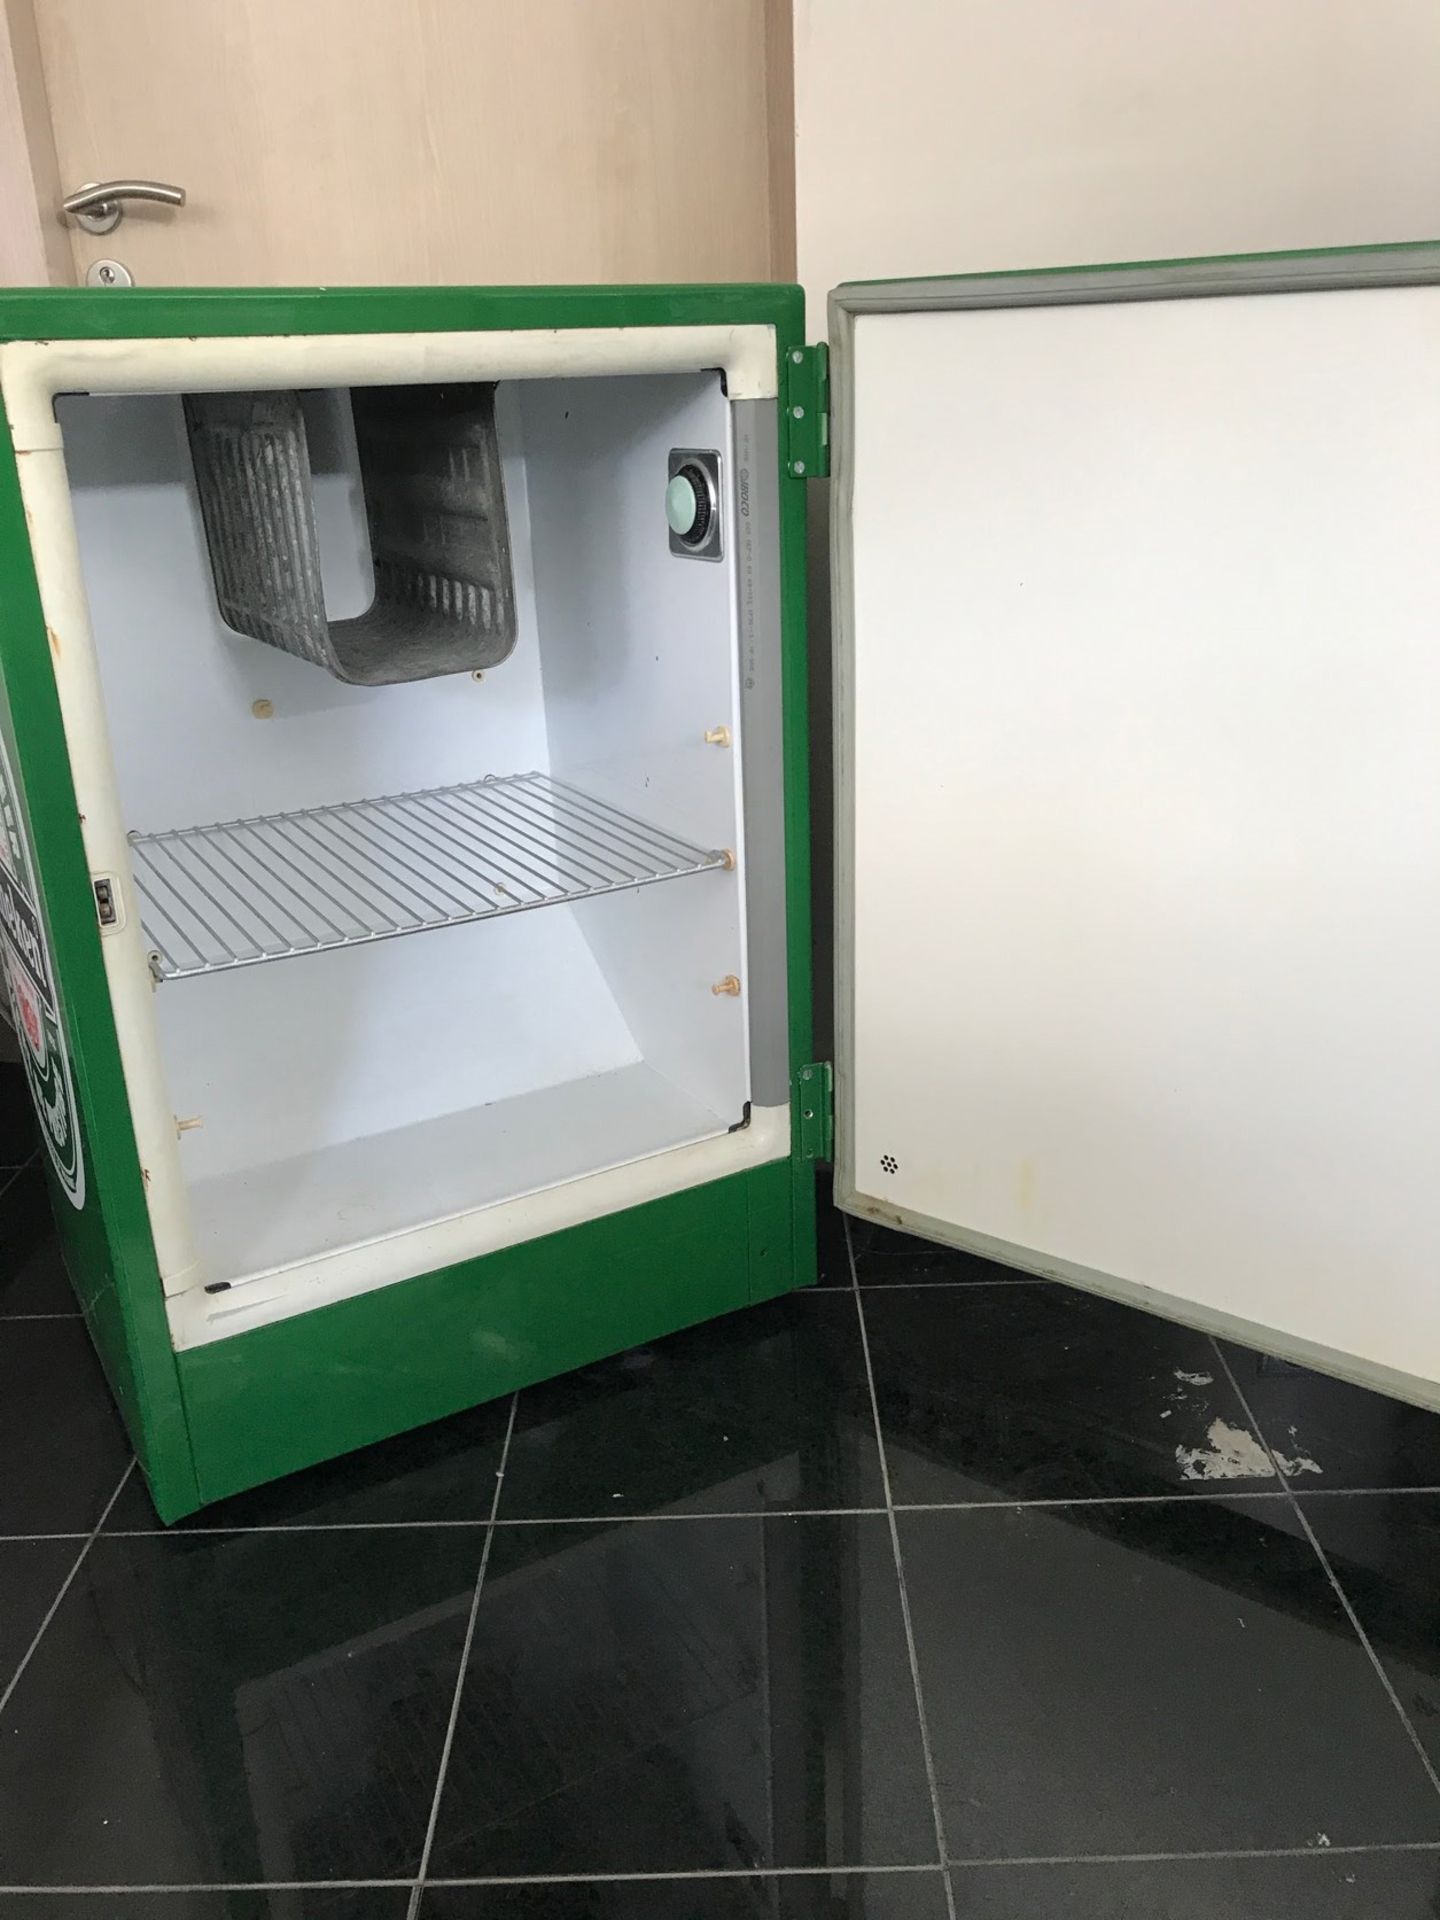 1964 Frigidaire Heineken Refrigerator in Glossy Green Color - Image 2 of 2